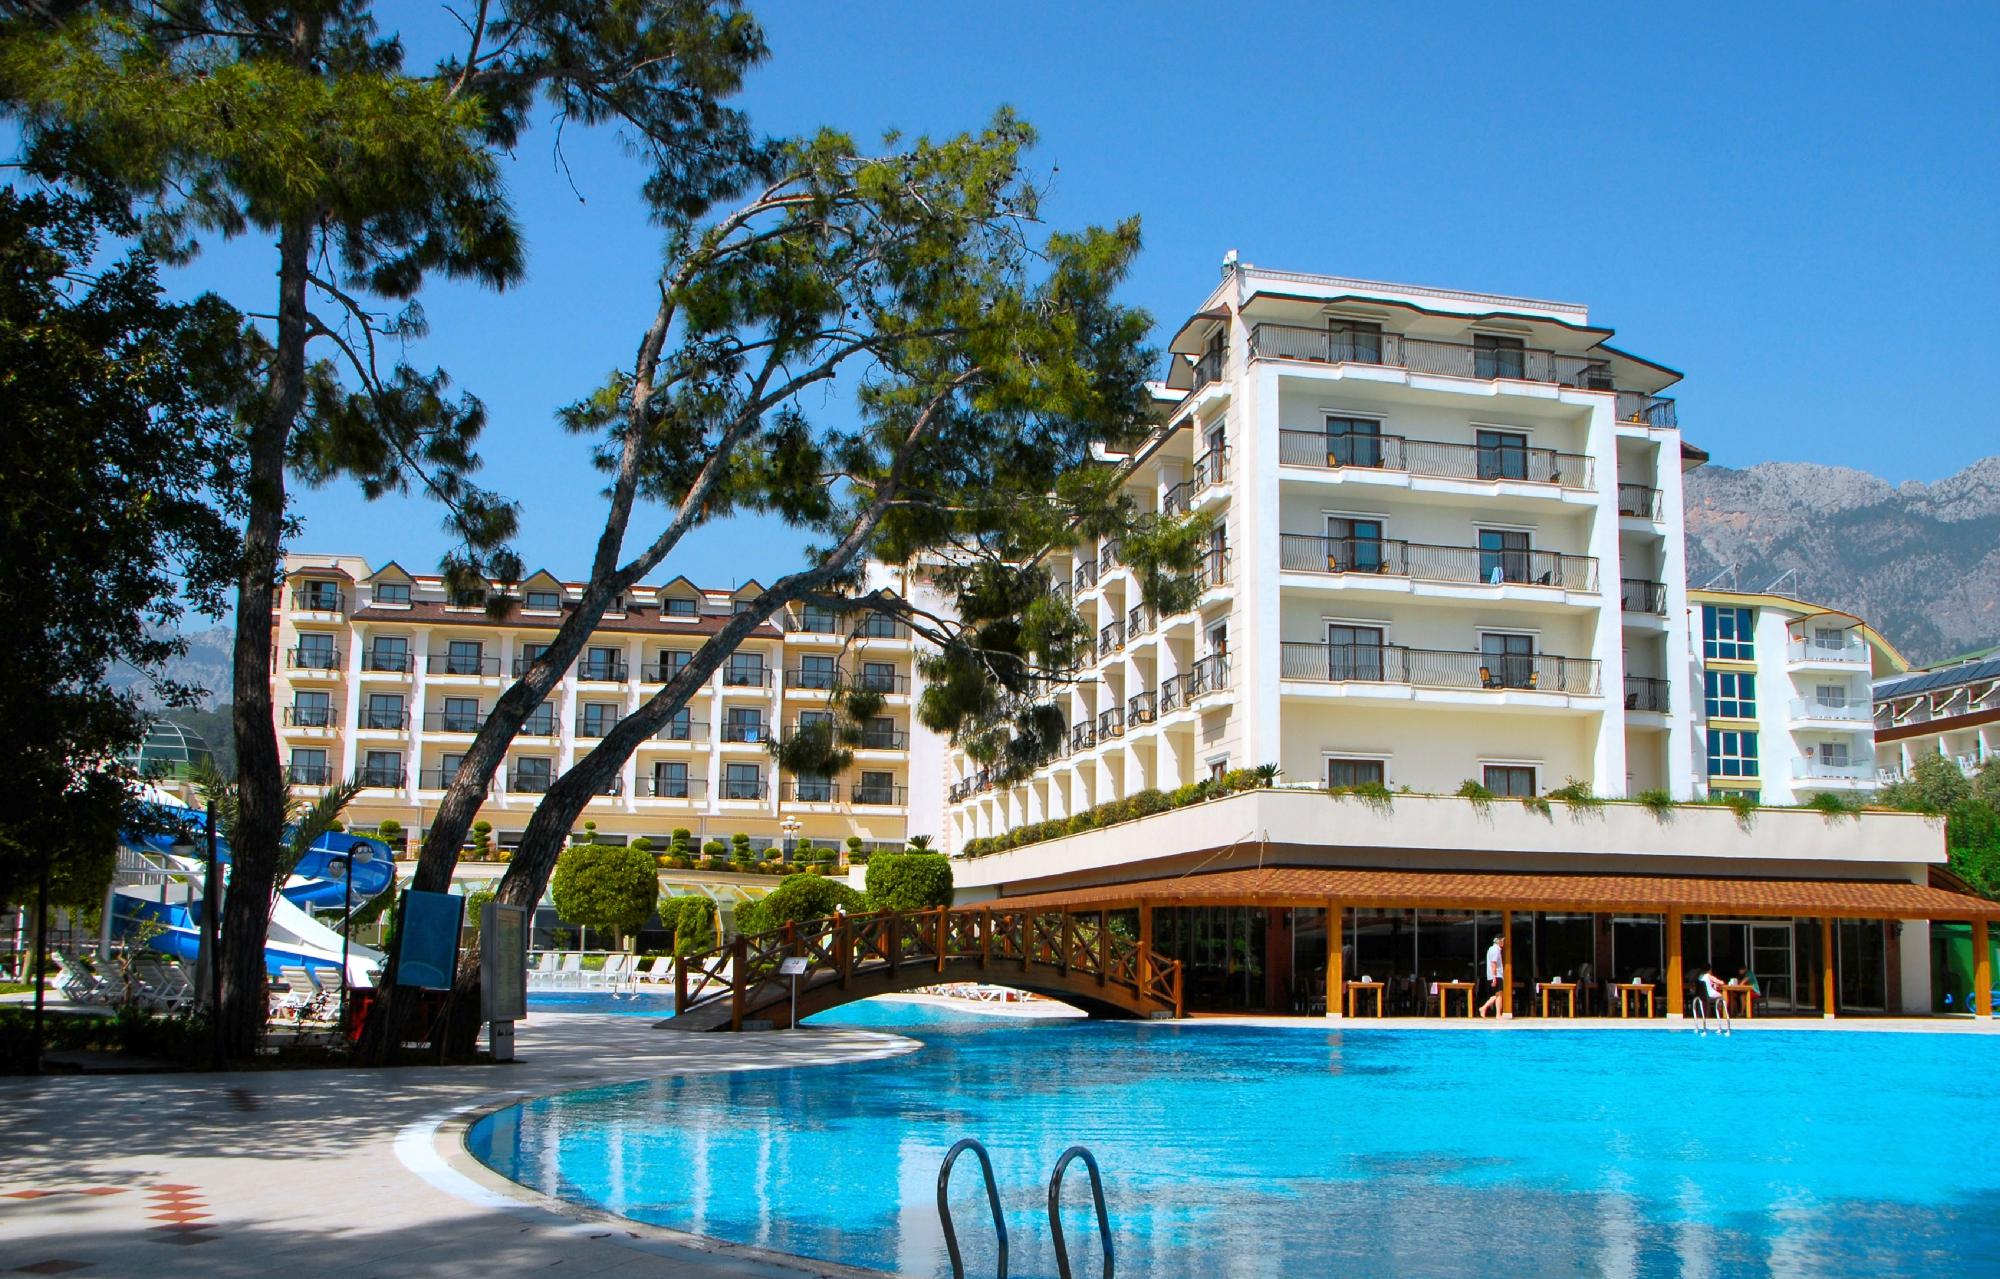 Palmet Beach Resort (ex. Sentido Palmet Beach) price